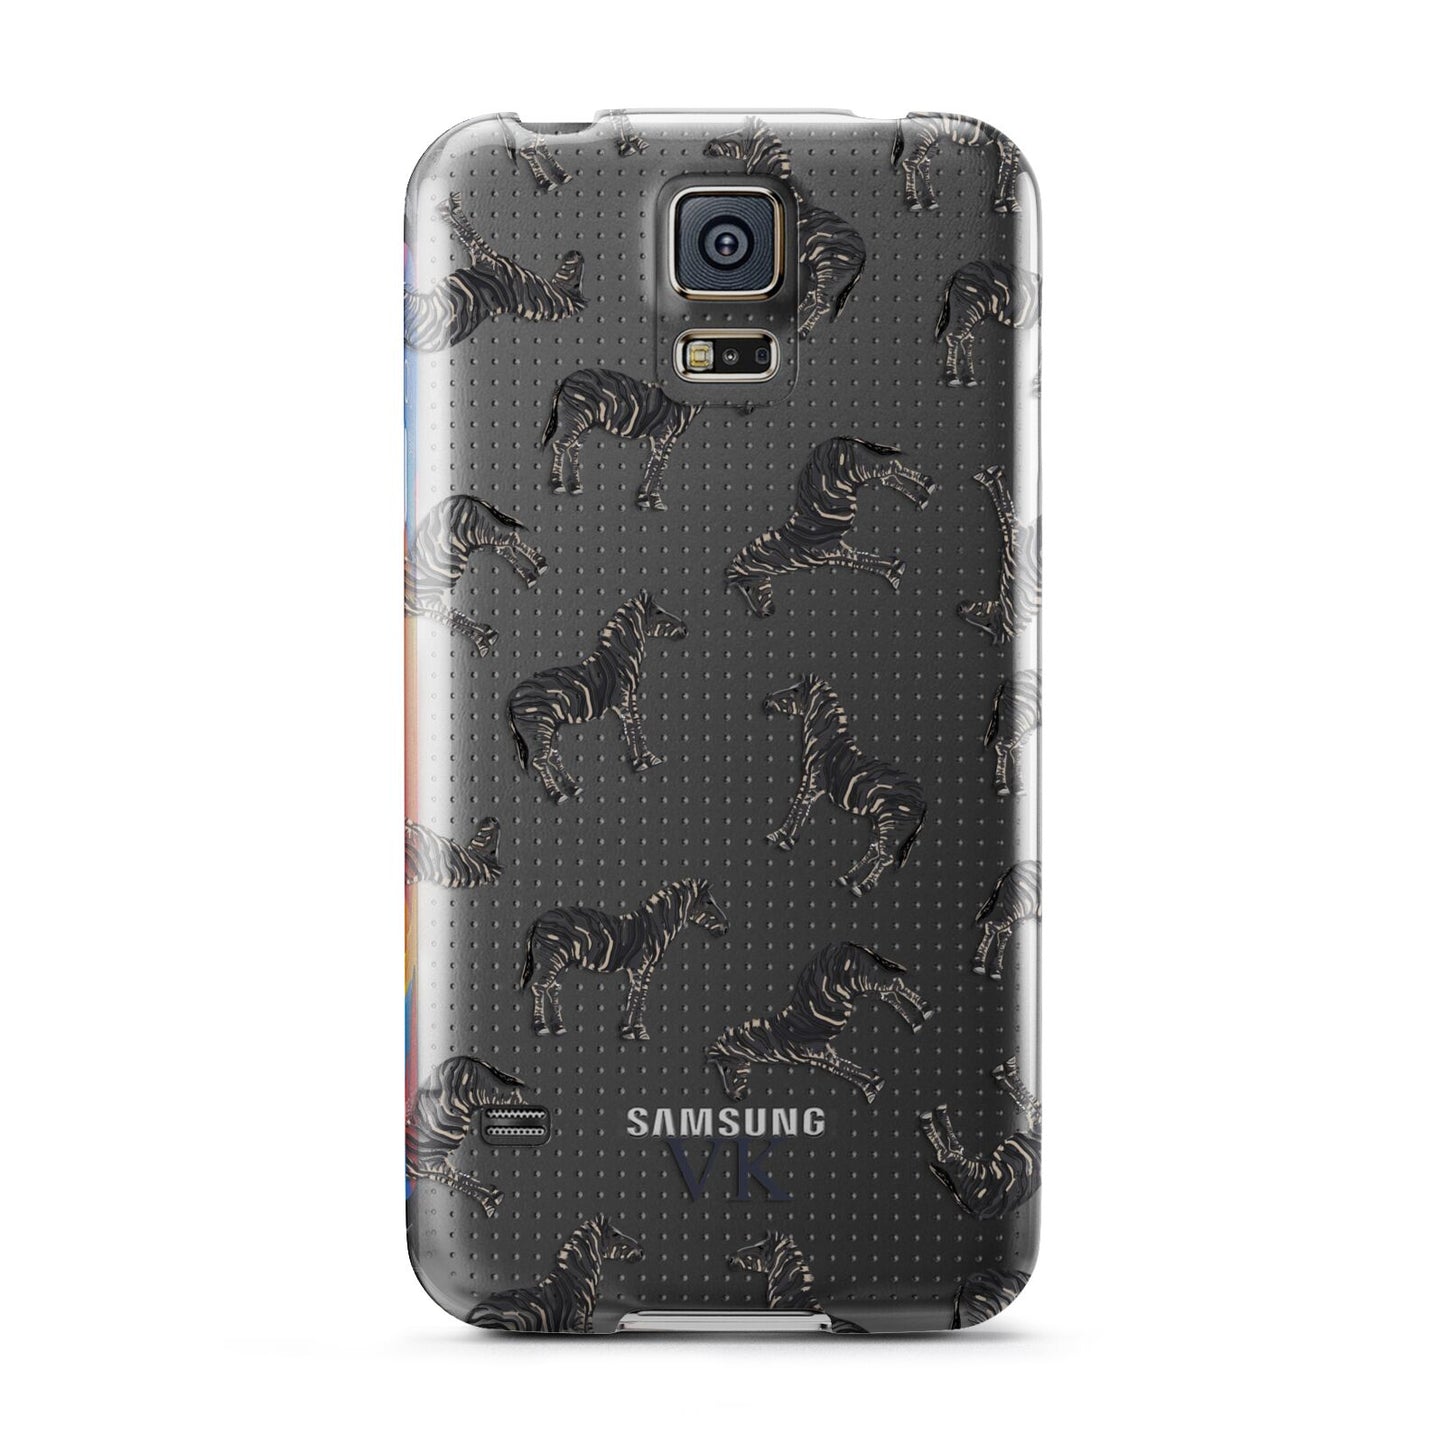 Personalised Zebra Samsung Galaxy S5 Case